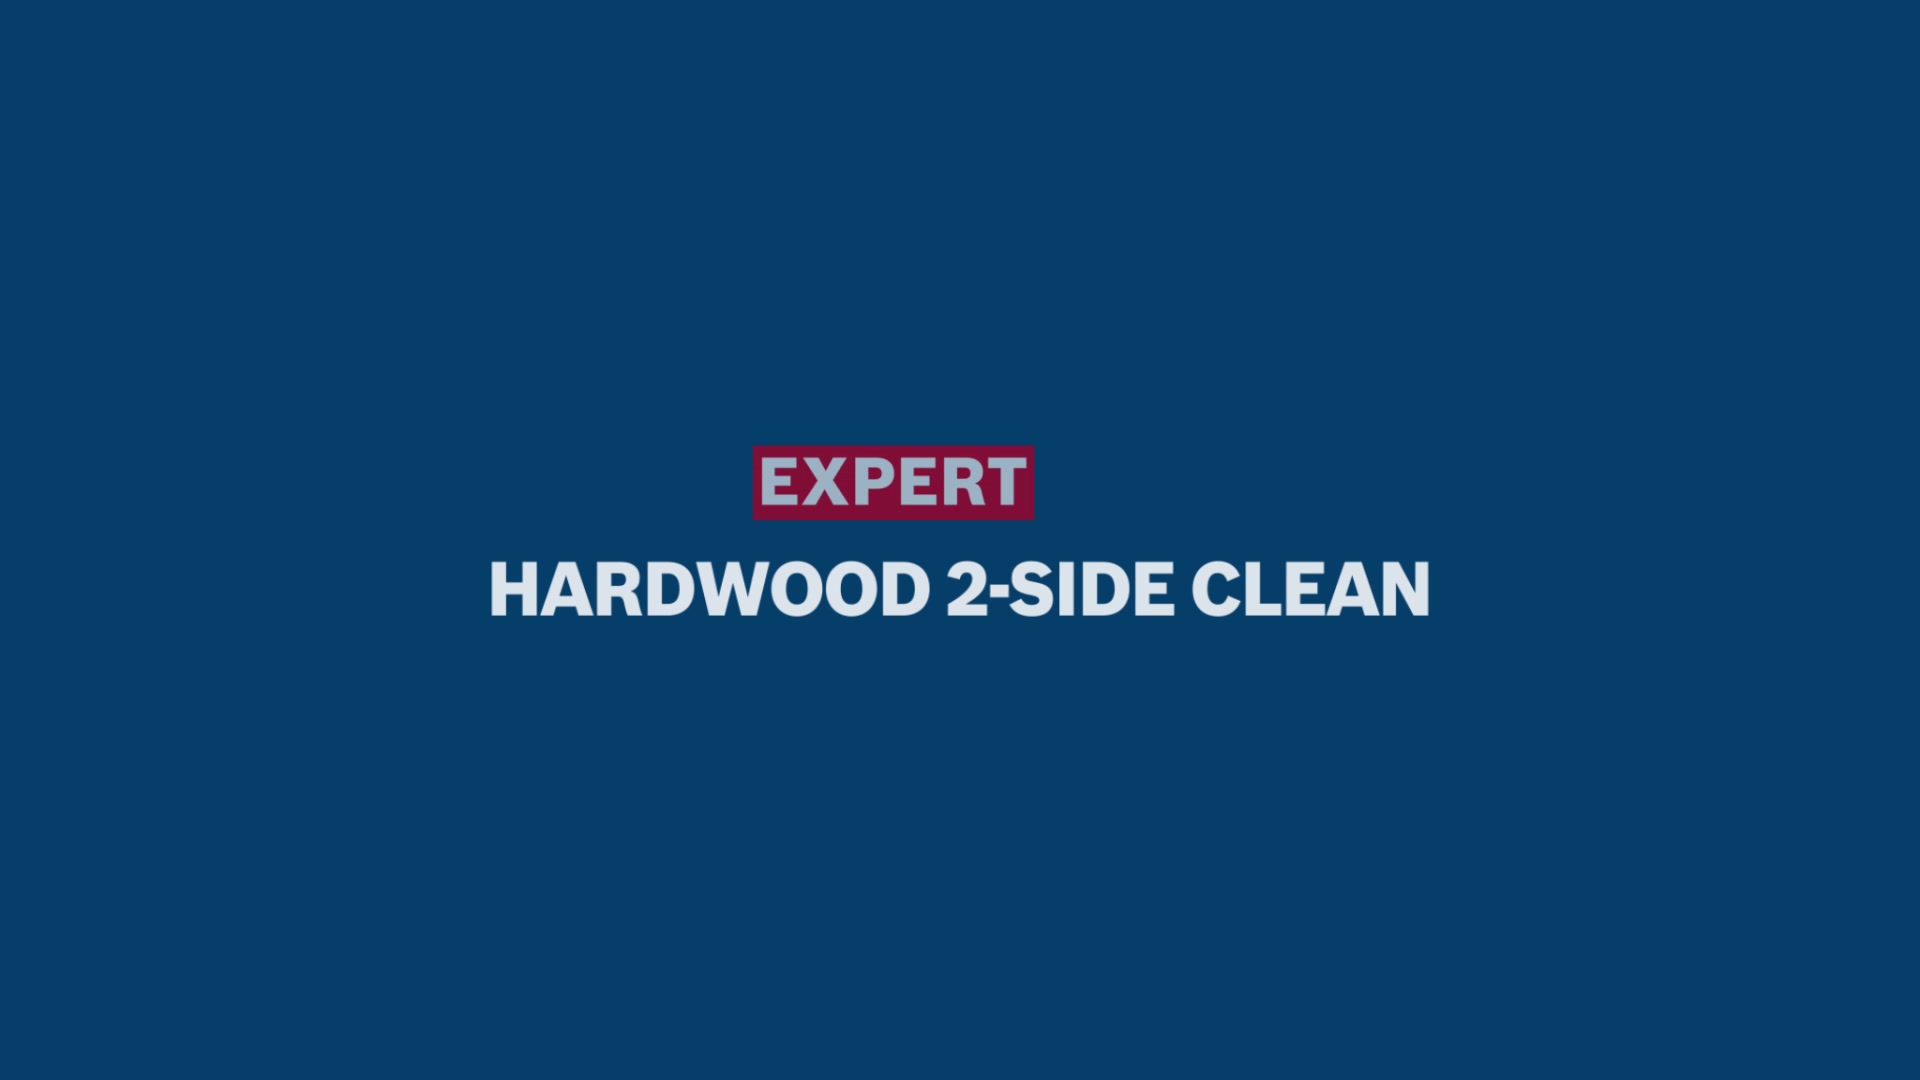 EXPERT Hardwood 2-side clean